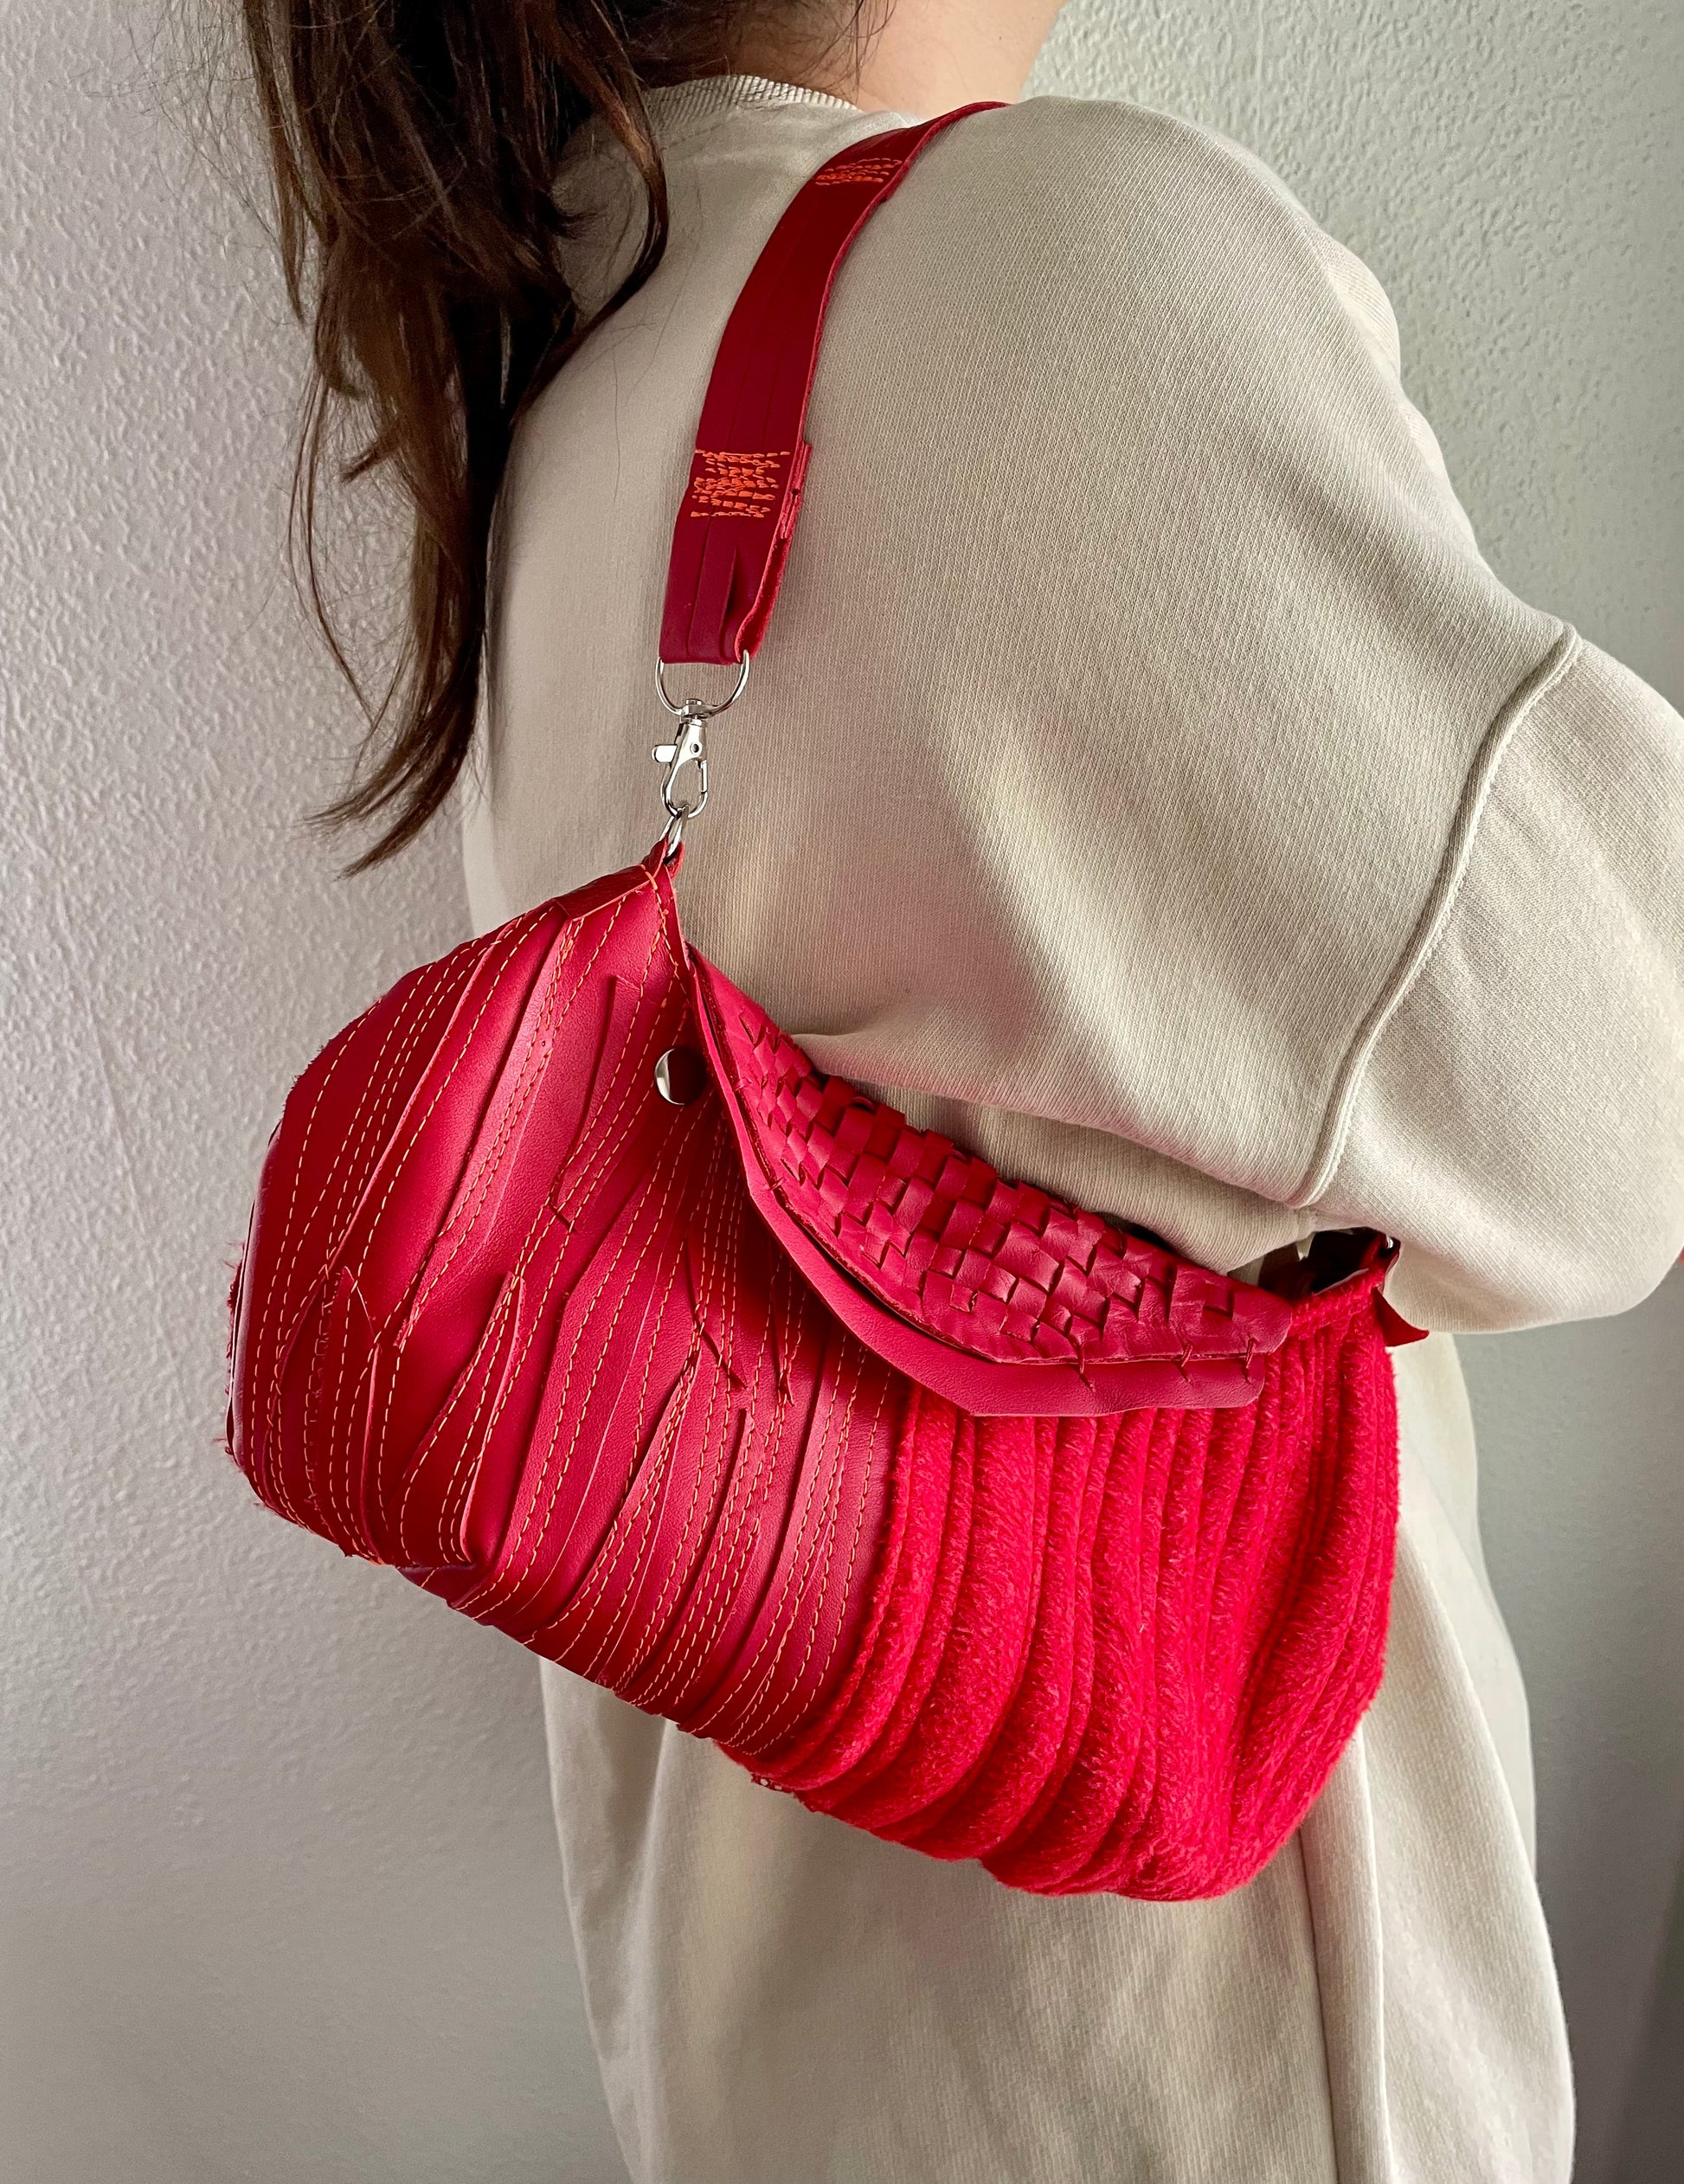 girl with red bag upcycled bag red handmade bag leftover fabrics checkered repurposed one of a kind leather bag handbag